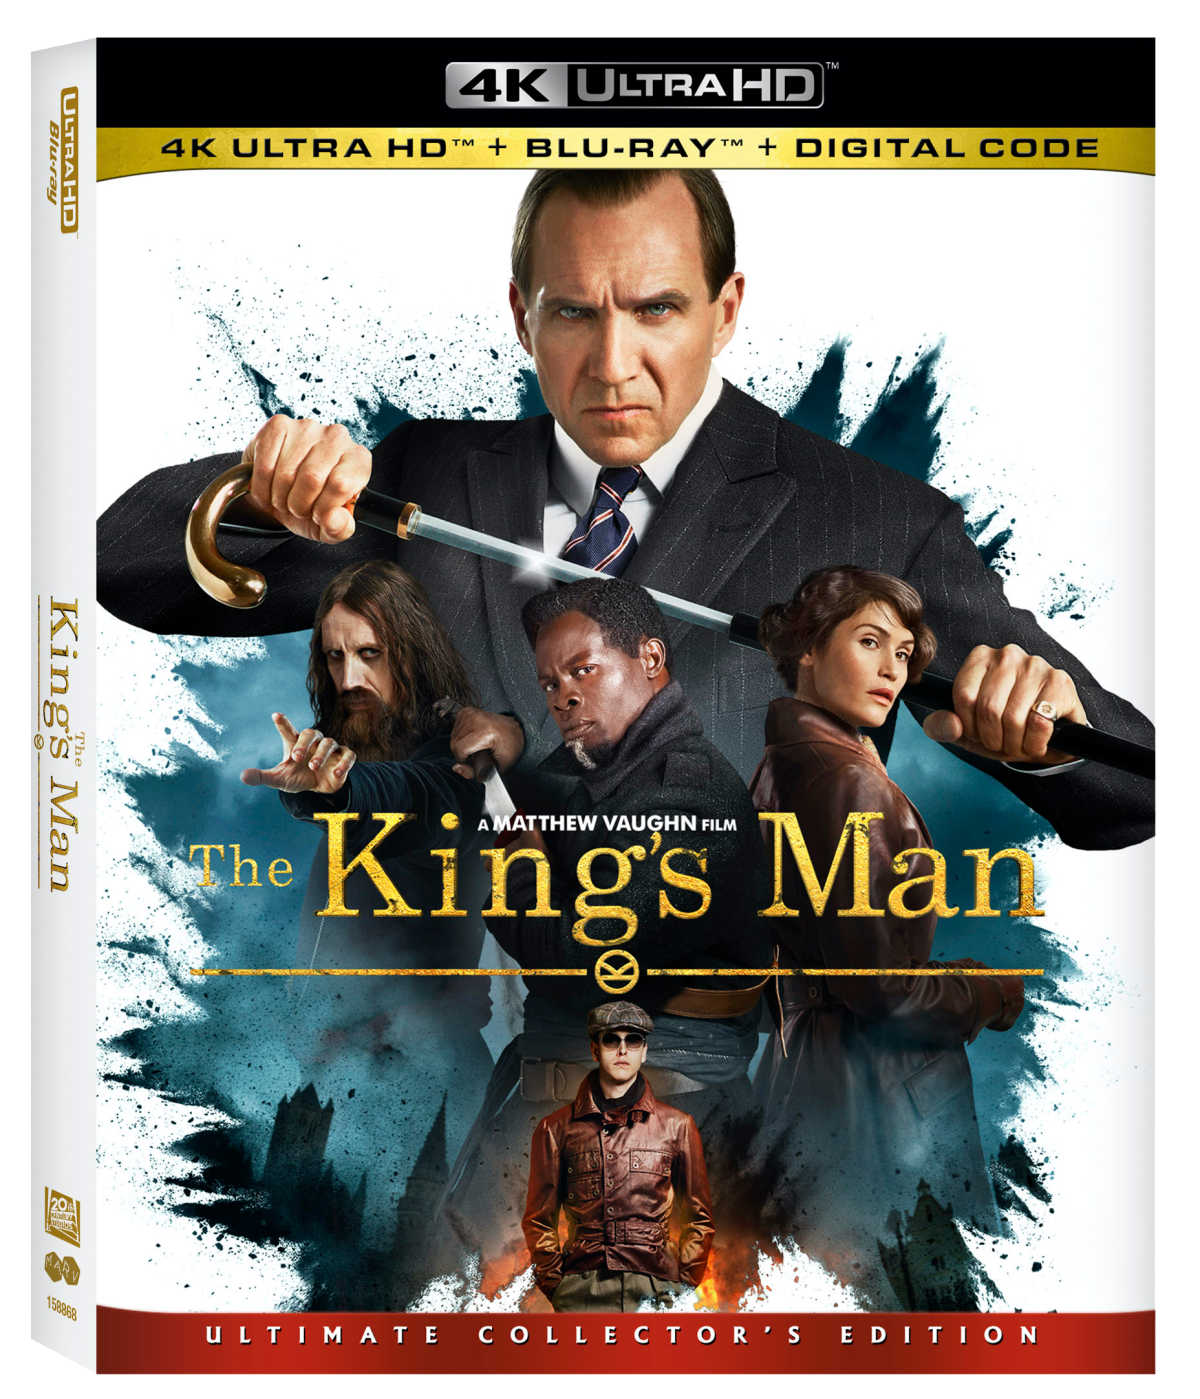 kingsman prequel 4k ultra hd the kings man matthew vaughn film